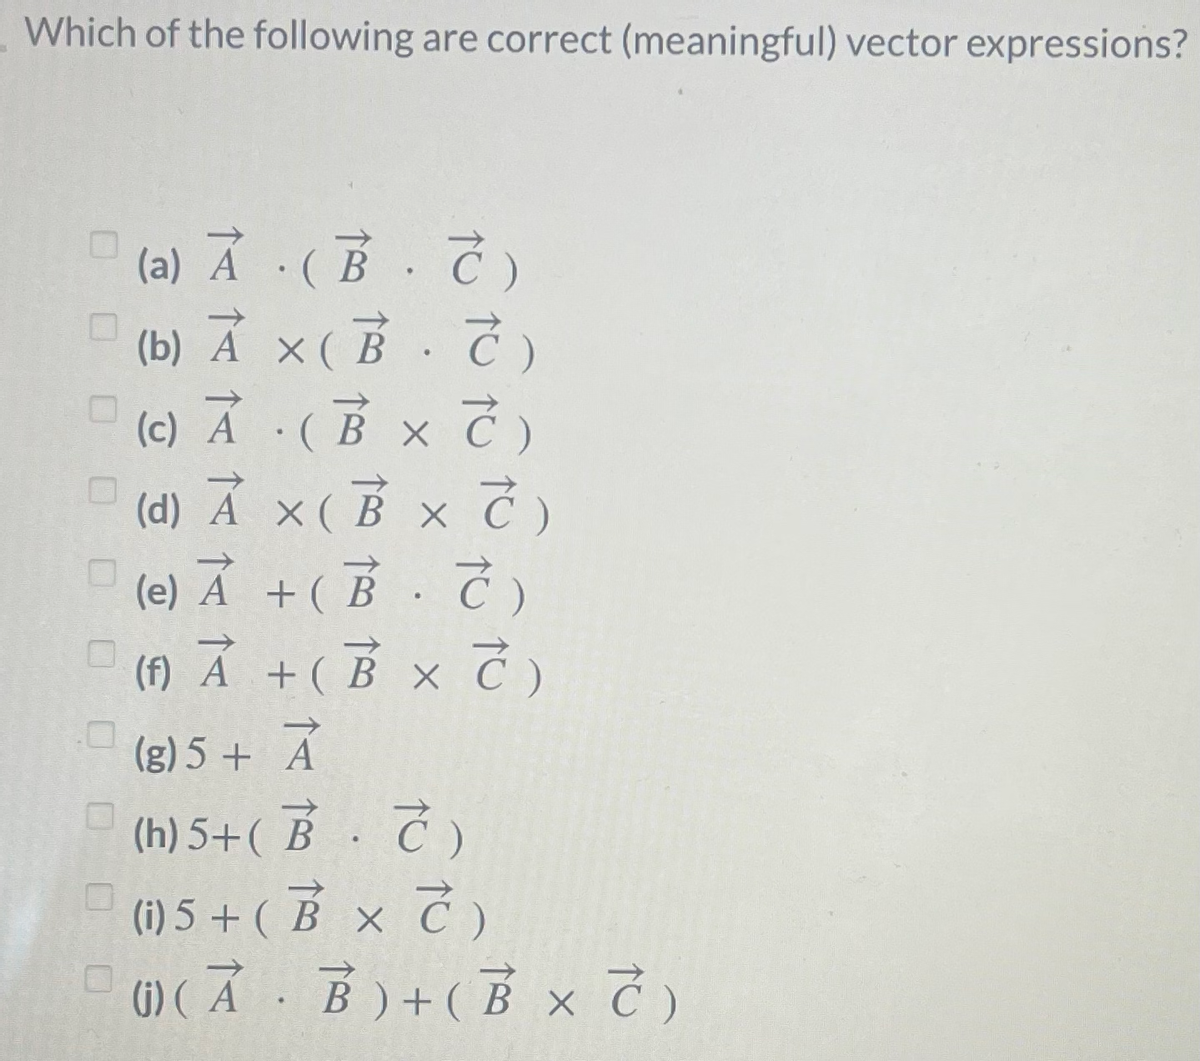 Which of the following are correct (meaningful) vector expressions?
(a) Ả ·(B. Č)
(b) Ả ×(B. 7)
(c) Ā :(B x Č)
X (
(d) Á ×(B xC)
(e) 지 +(B.C)
(f) Á +( B × C )
(g) 5 + Á
(h) 5+( B. 7 )
В
(i) 5 + ( B x Ć )
6) ( Ả B)+( B x )
